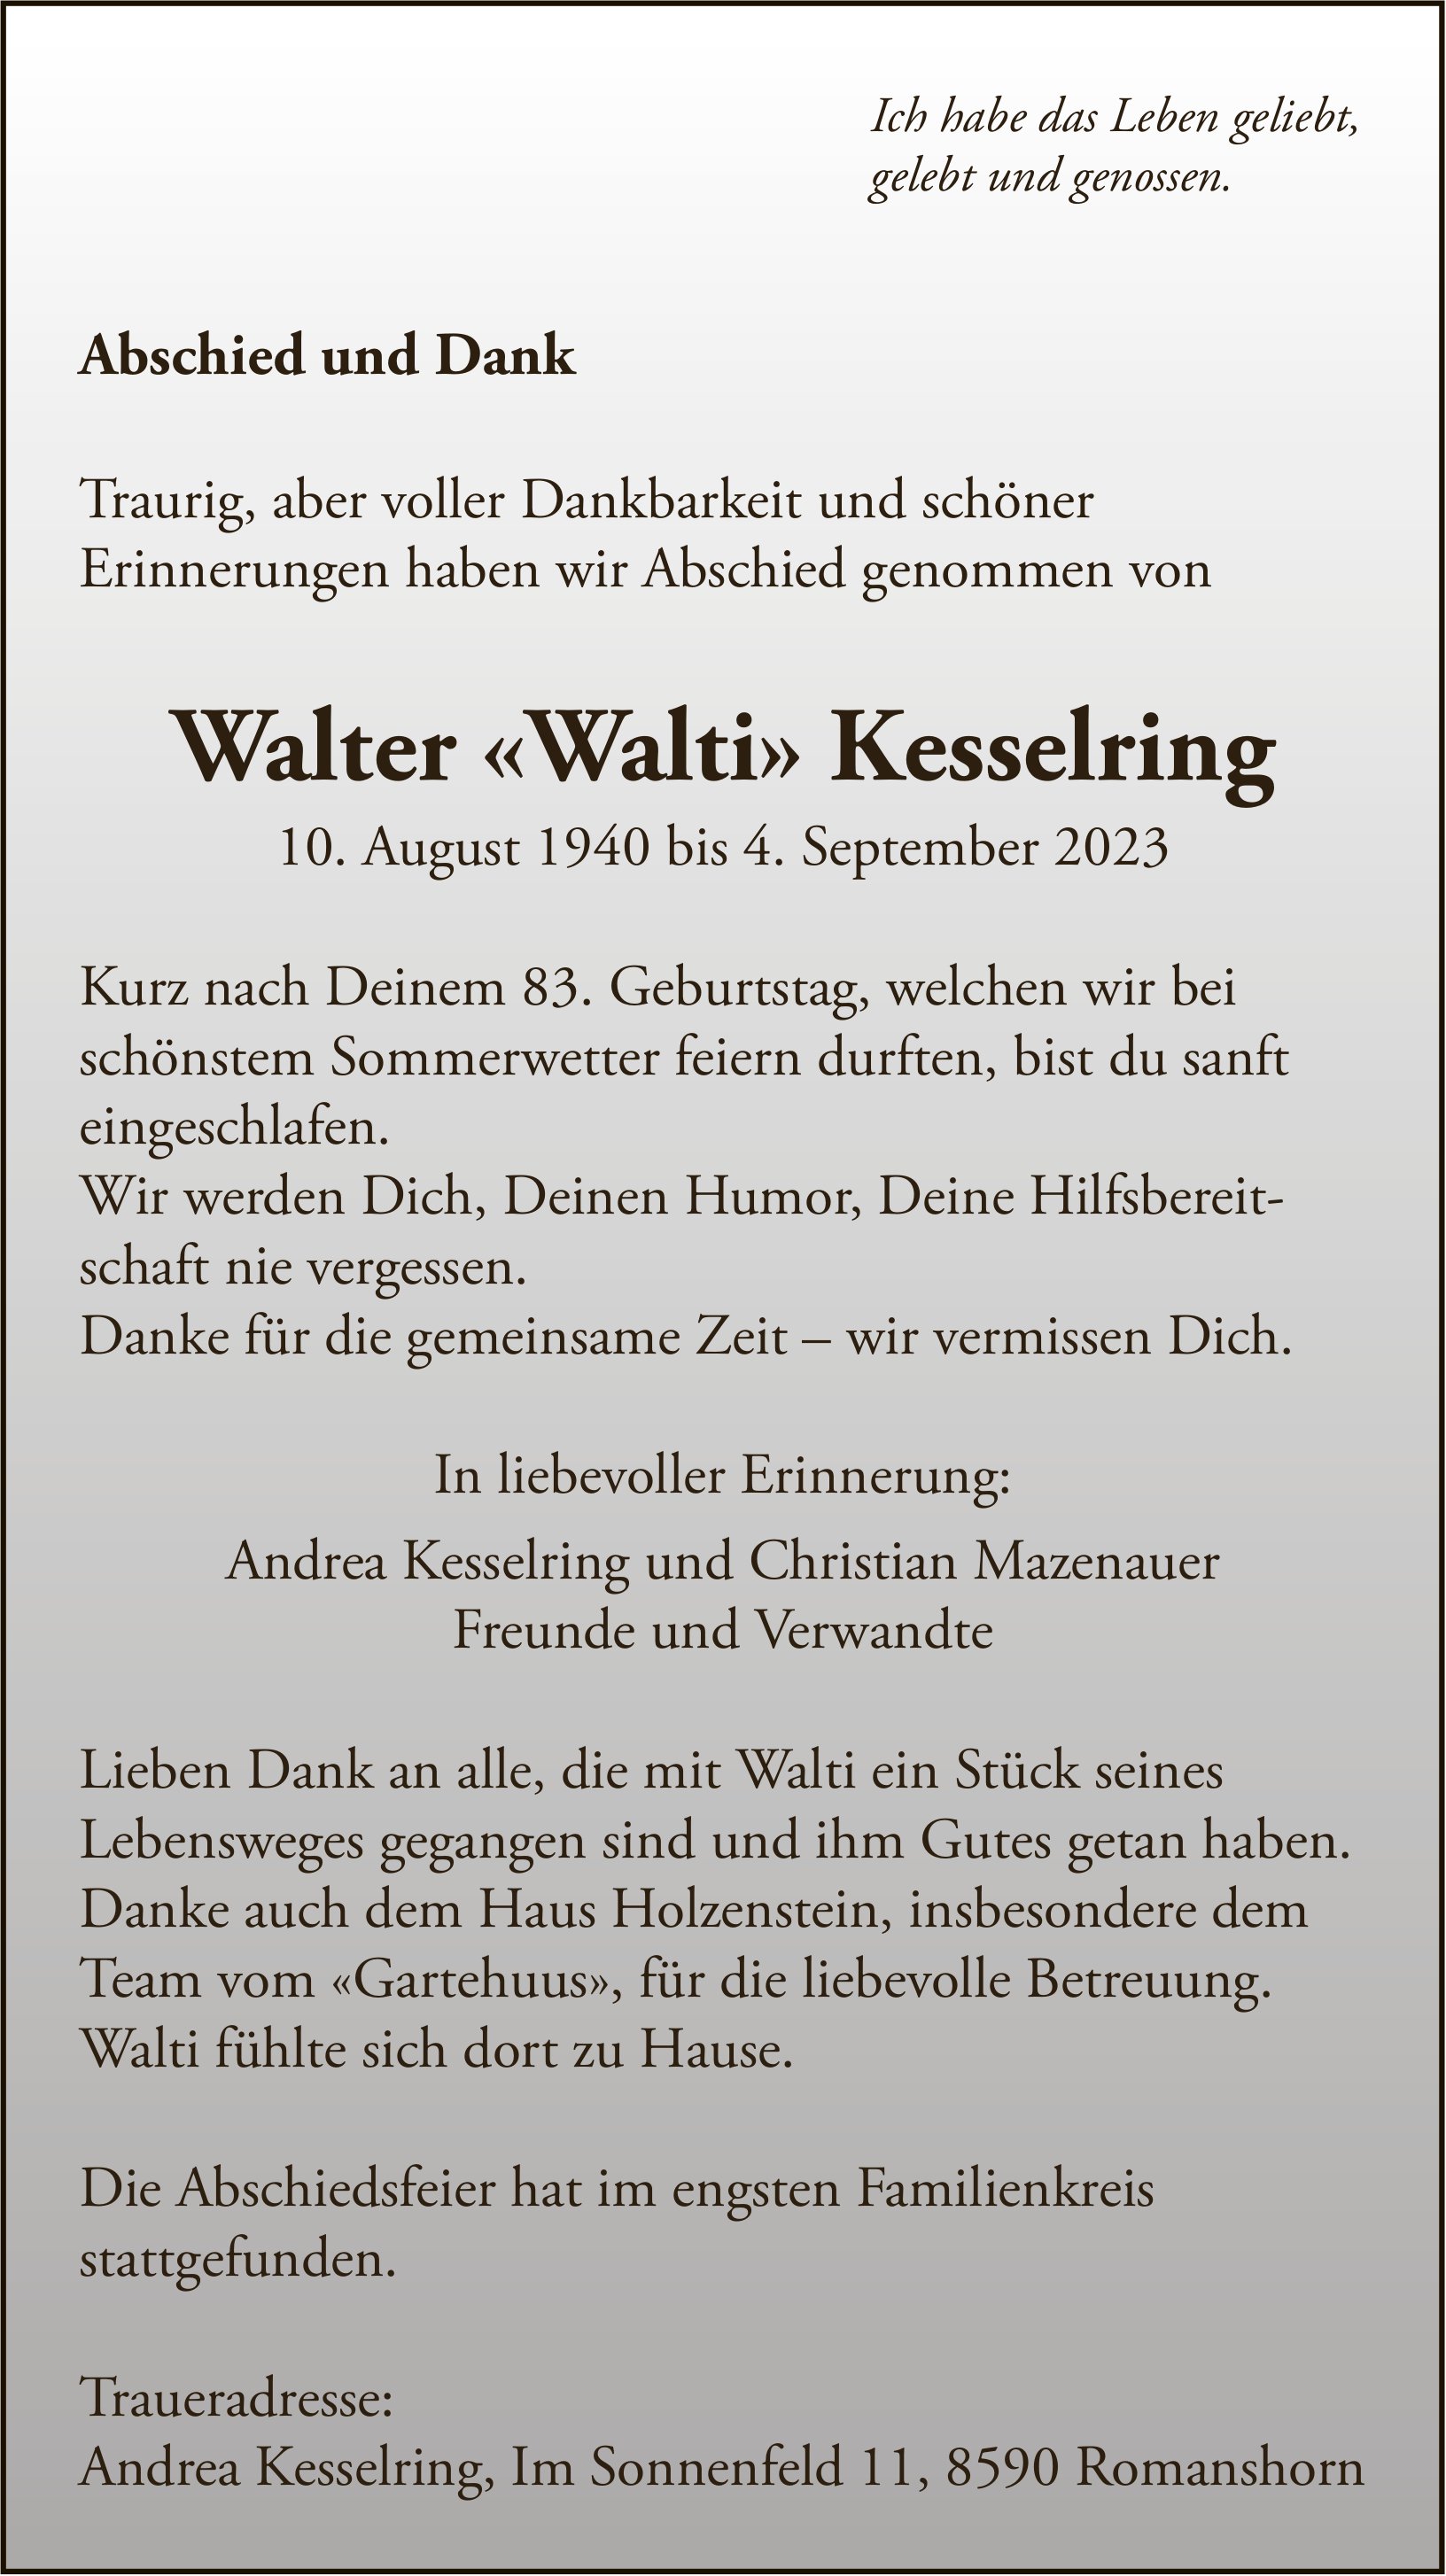 Kesselring Walter «Walti», September 2023 / TA